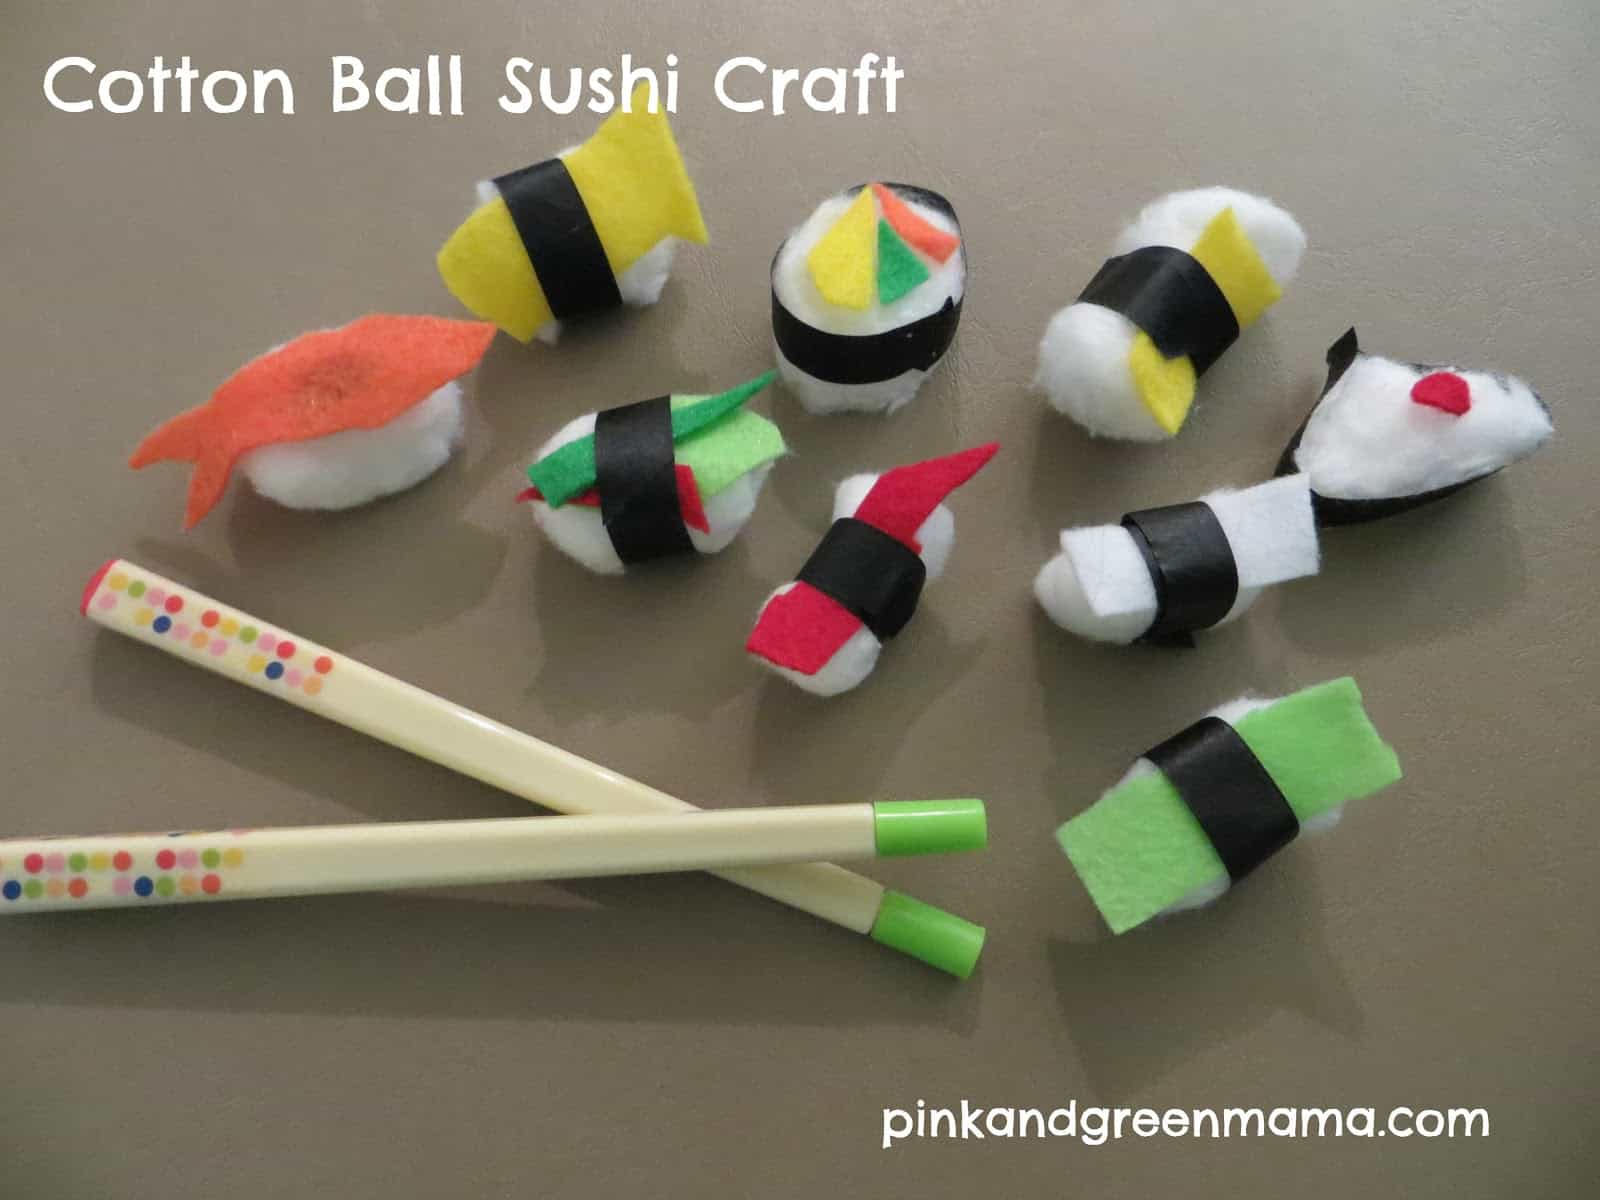 Cotton ball sushi